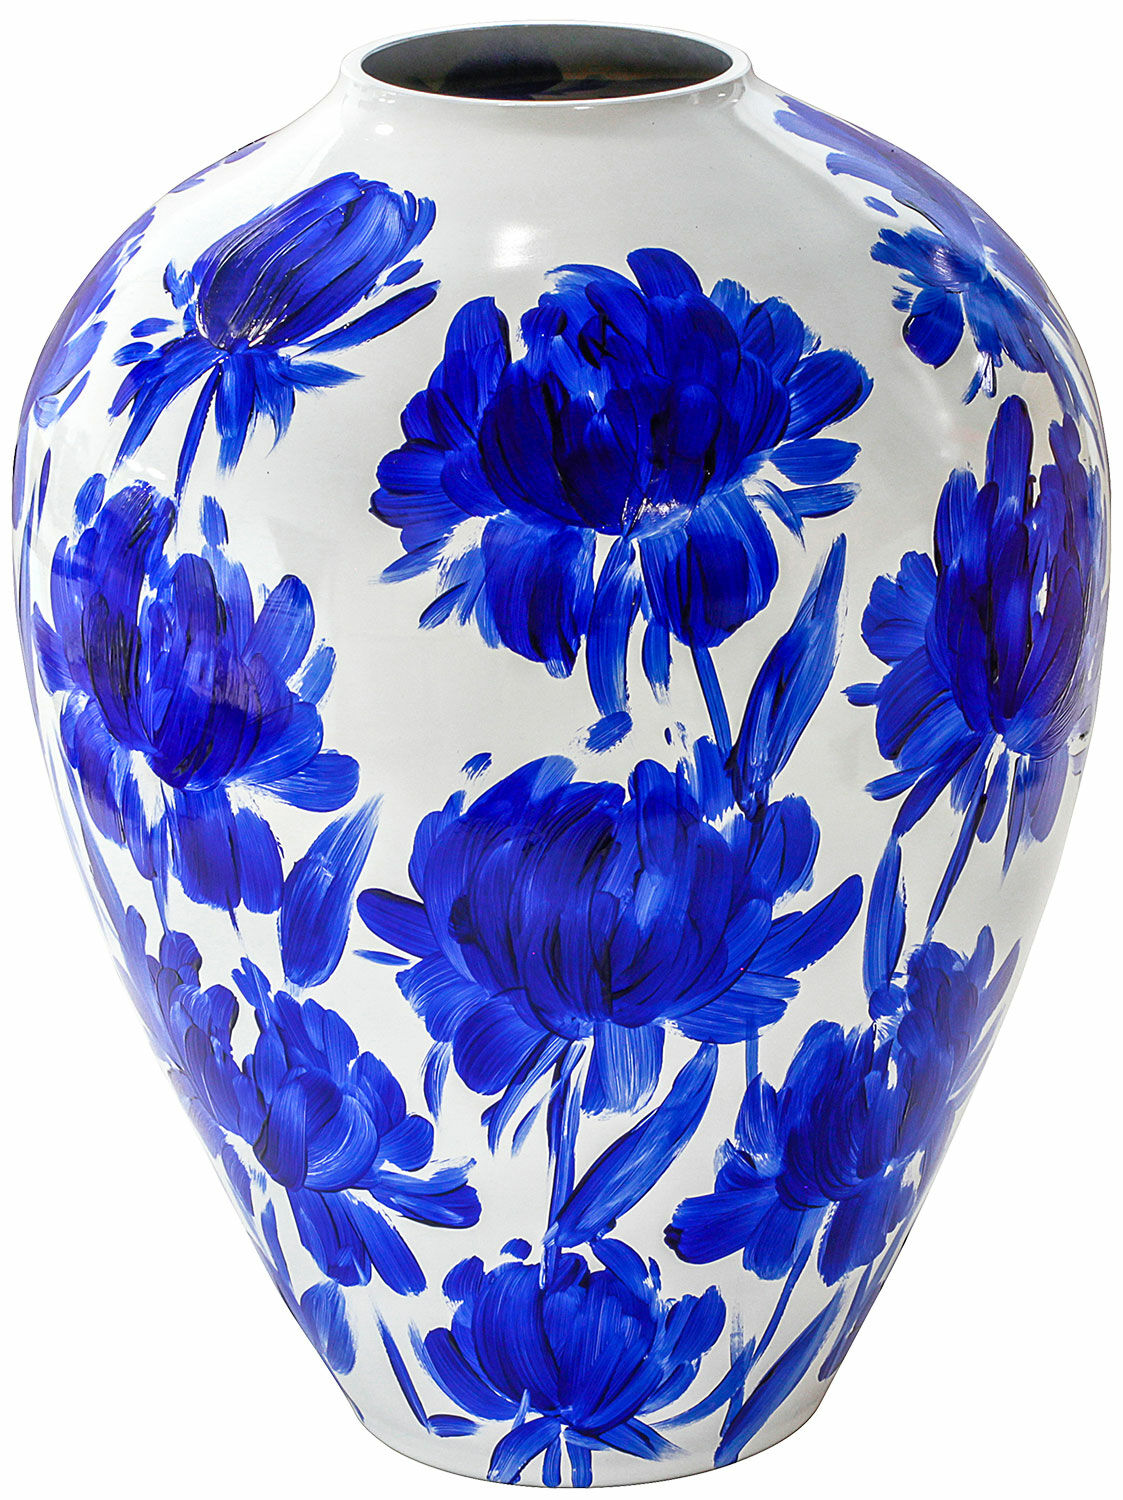 Glass vase "Blue Dahlia" by Milou van Schaik Martinet